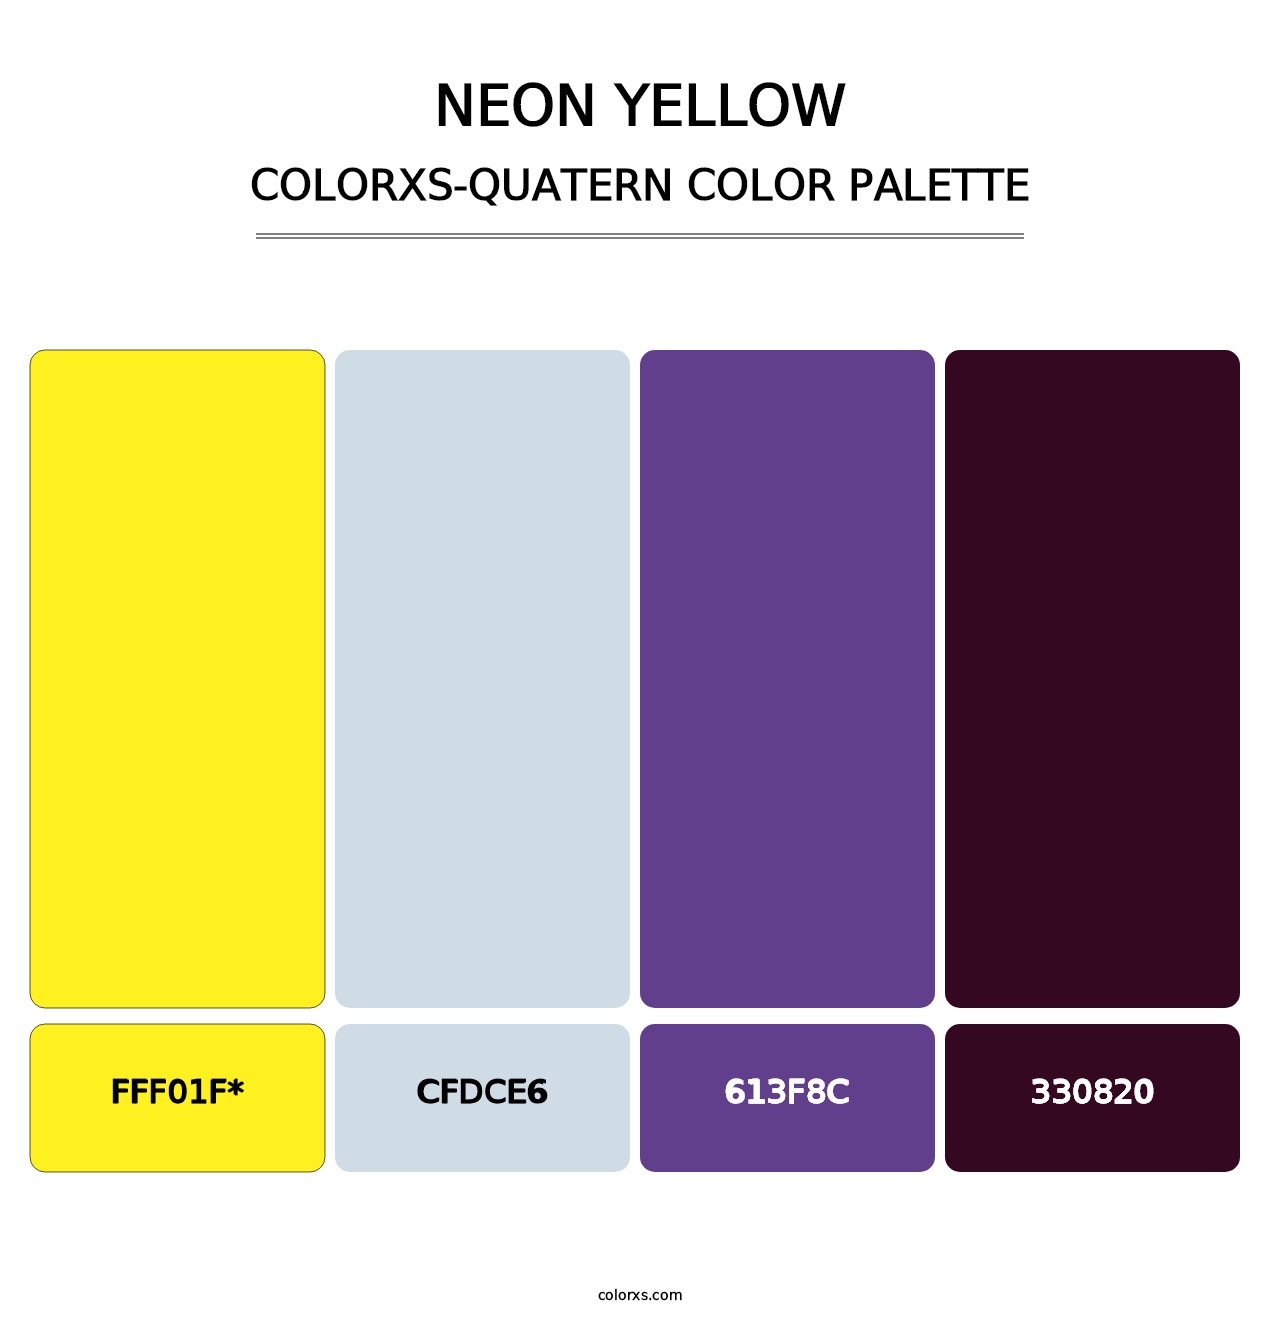 Neon Yellow - Colorxs Quatern Palette